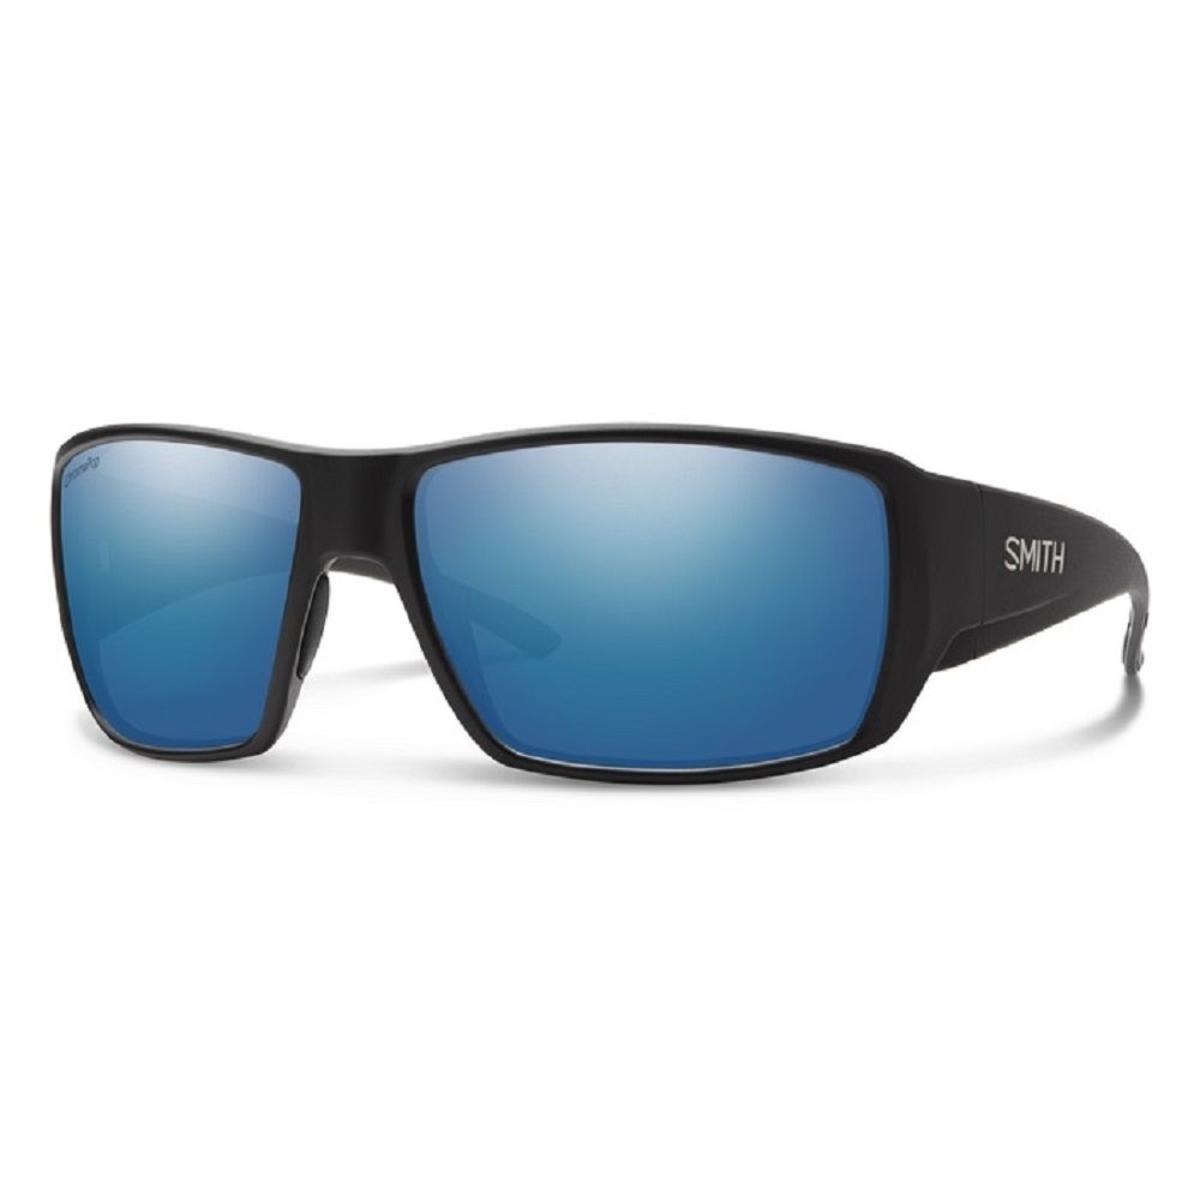 Smith Optics Guide's Choice Sunglasses ChromaPop Glass Polarized Blue Mirror - Matte Black Frame